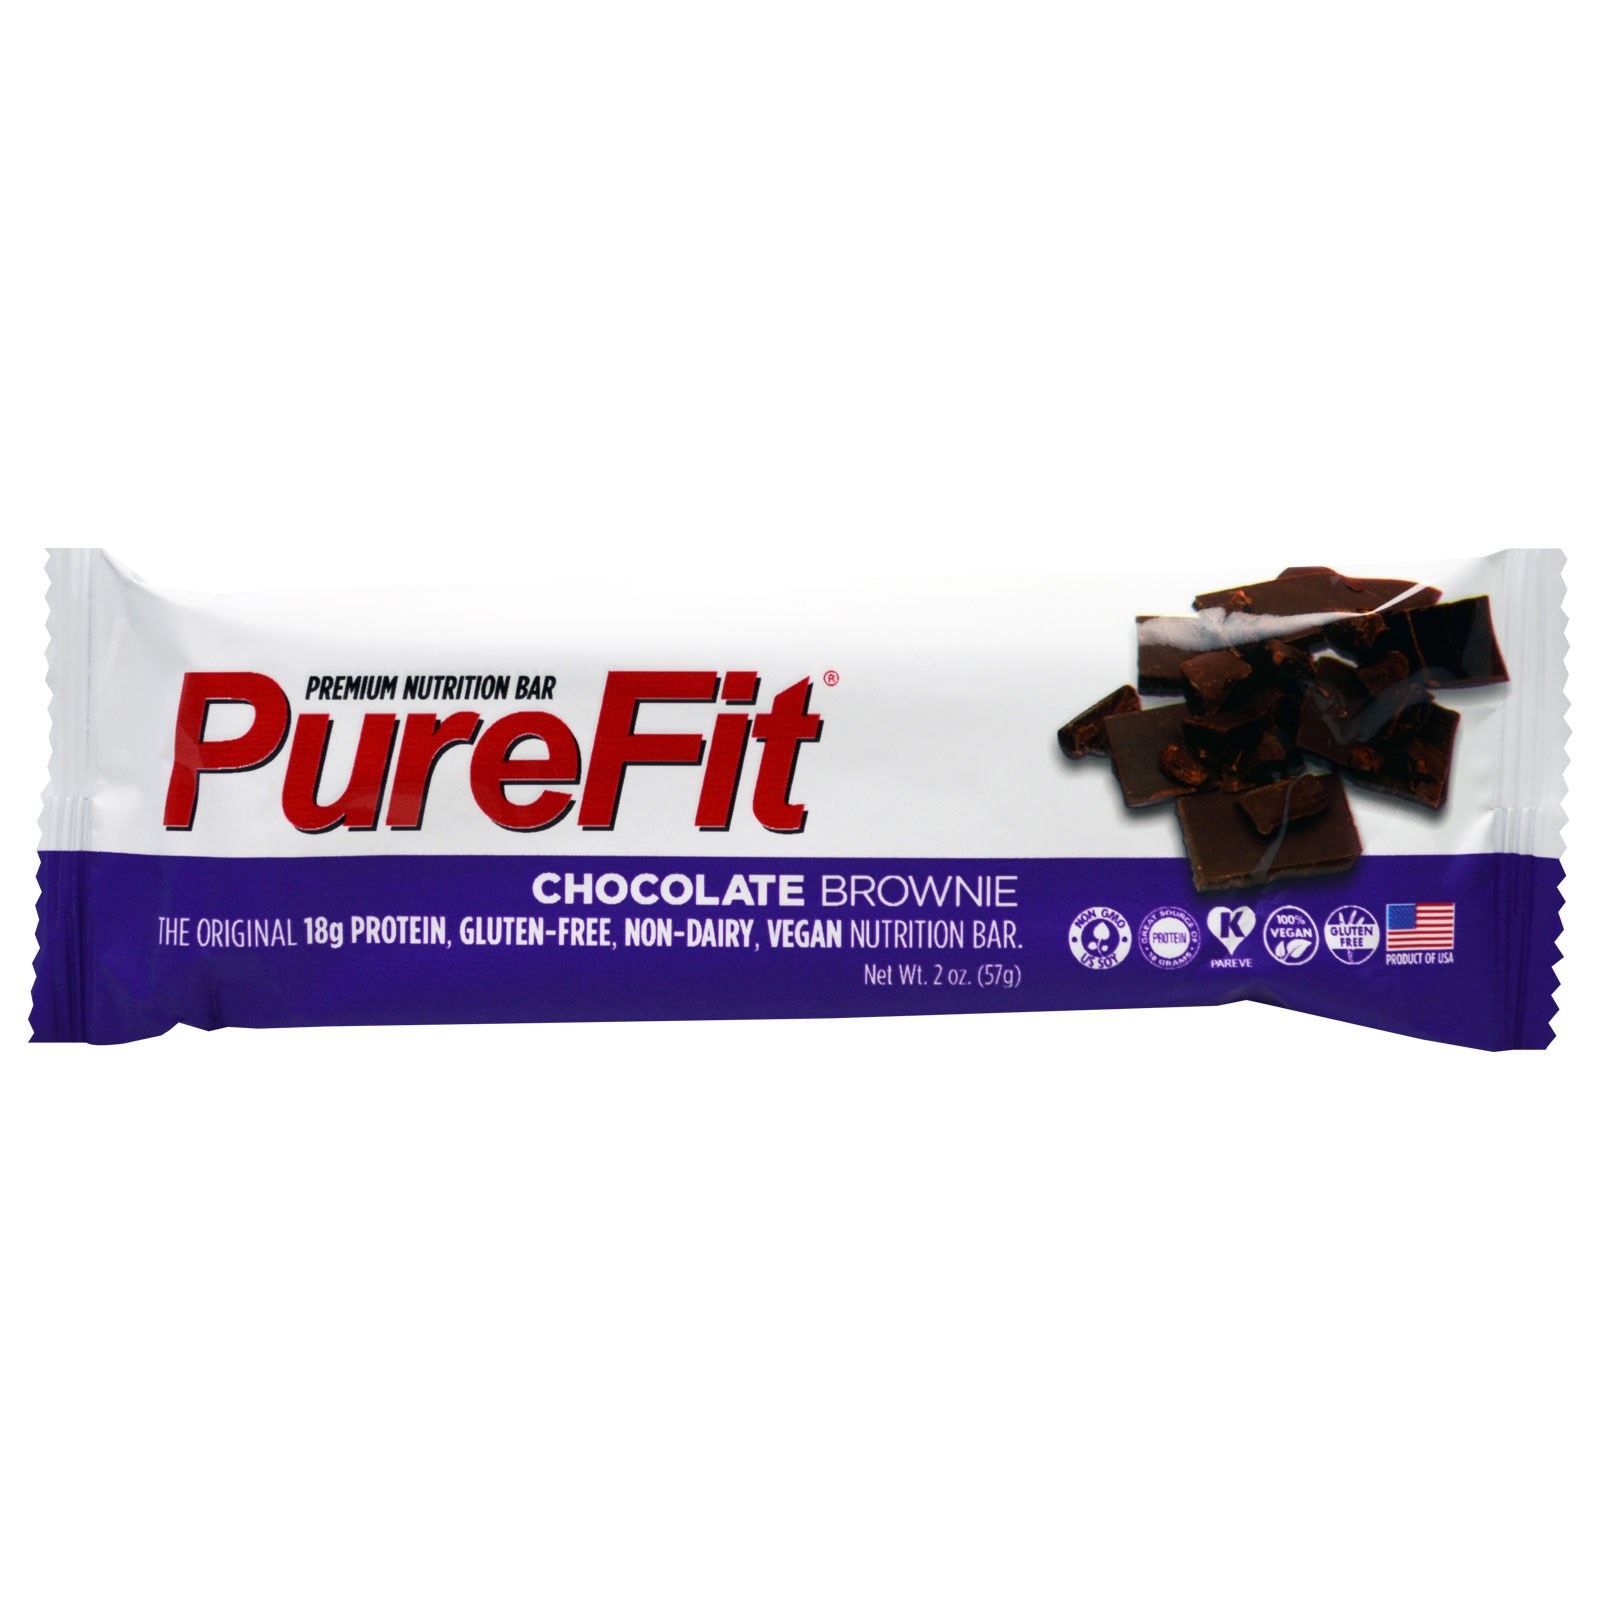 PureFit Nutrition Bars - High Protein Gluten-Free Vegan Nutrition Bars